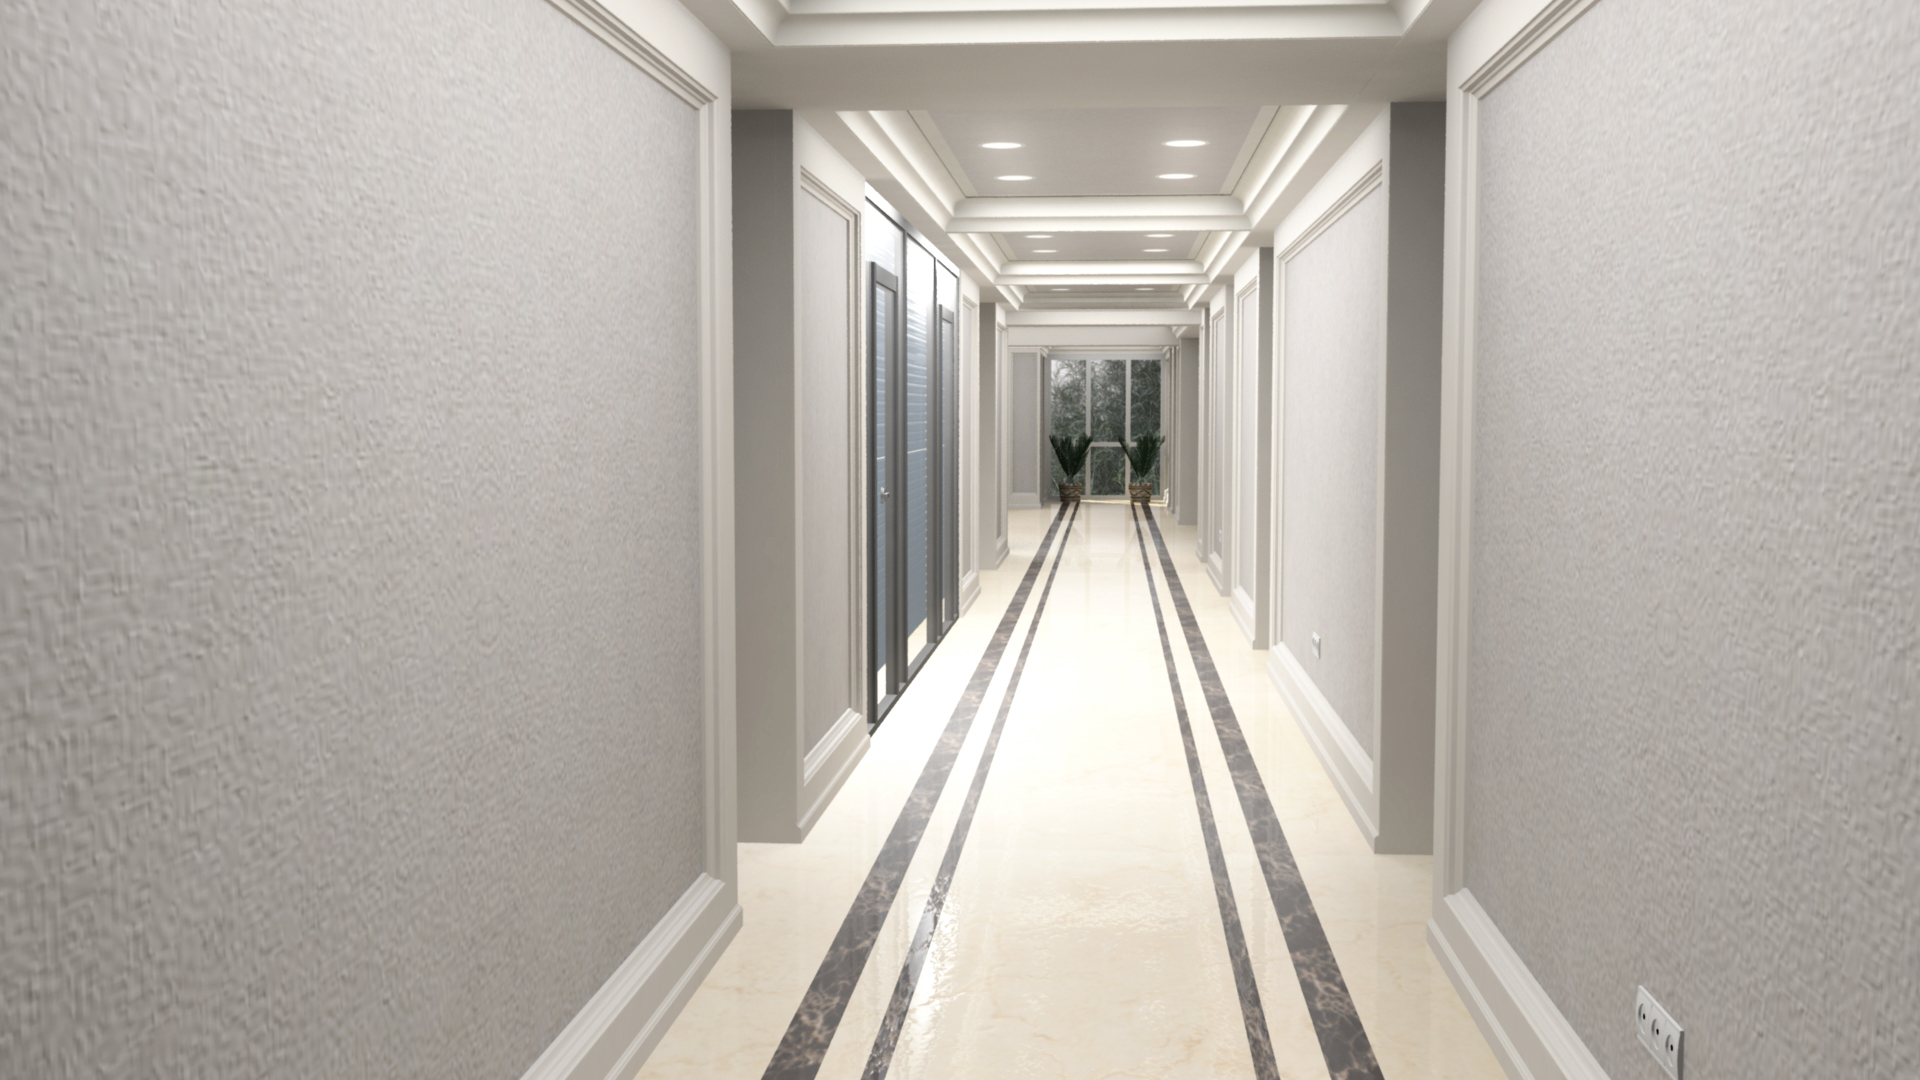 Corridoio corridoio in Maya mental ray immagine